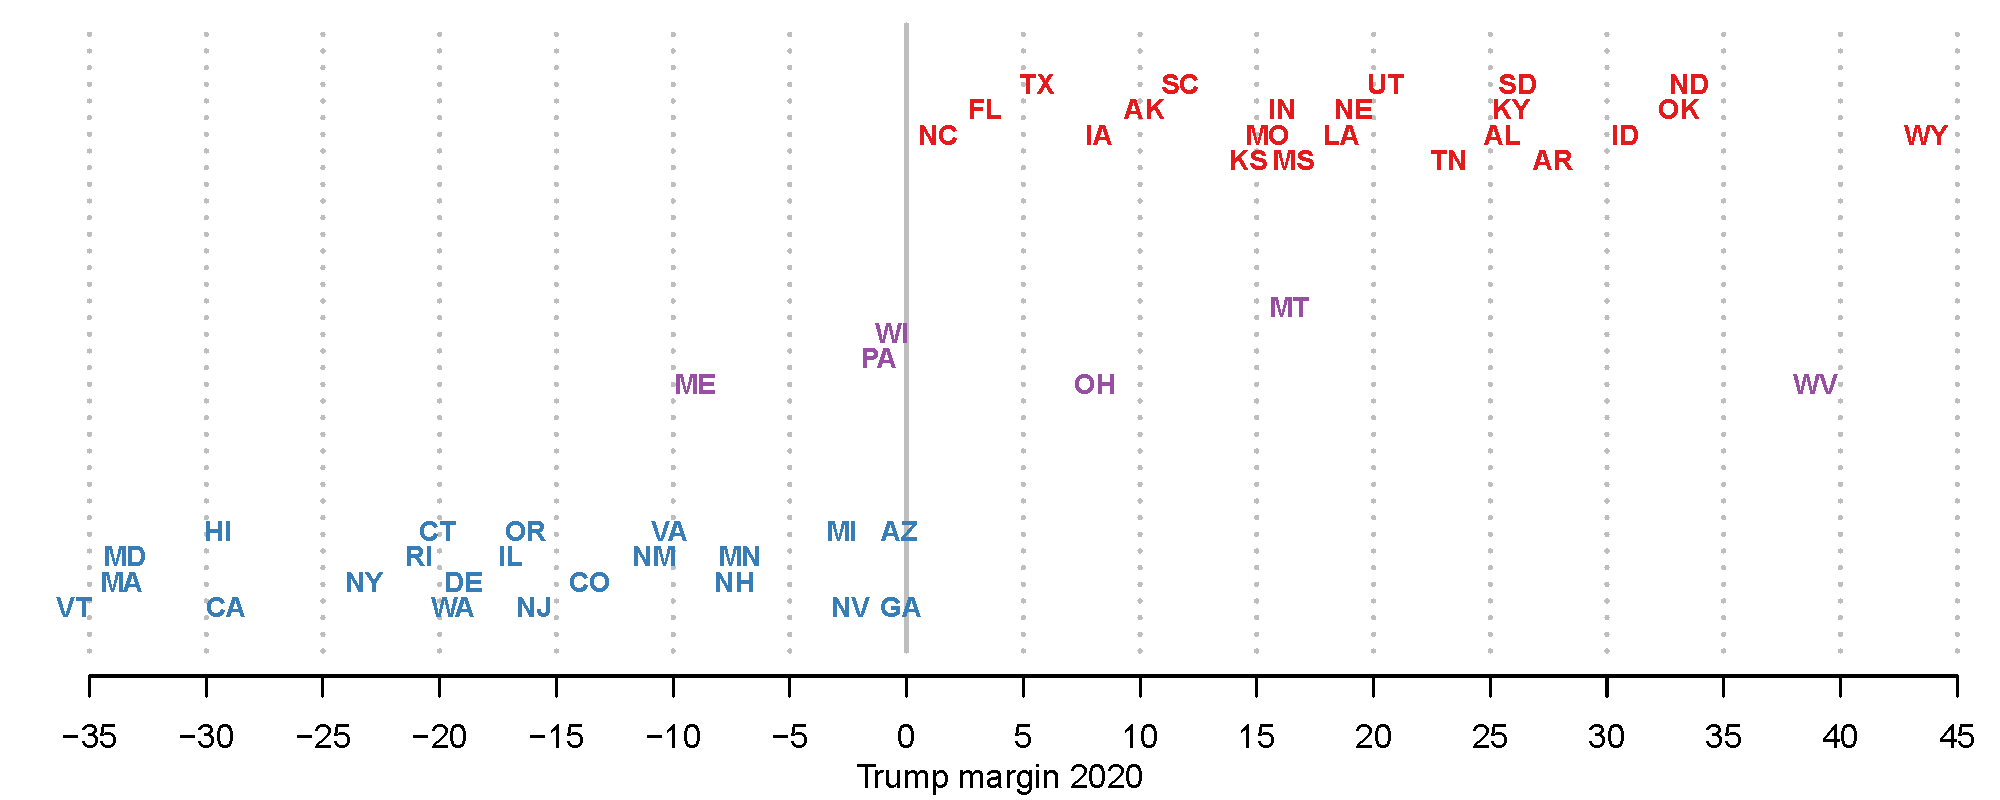 Senate seat alignment by 2020 presidential margin